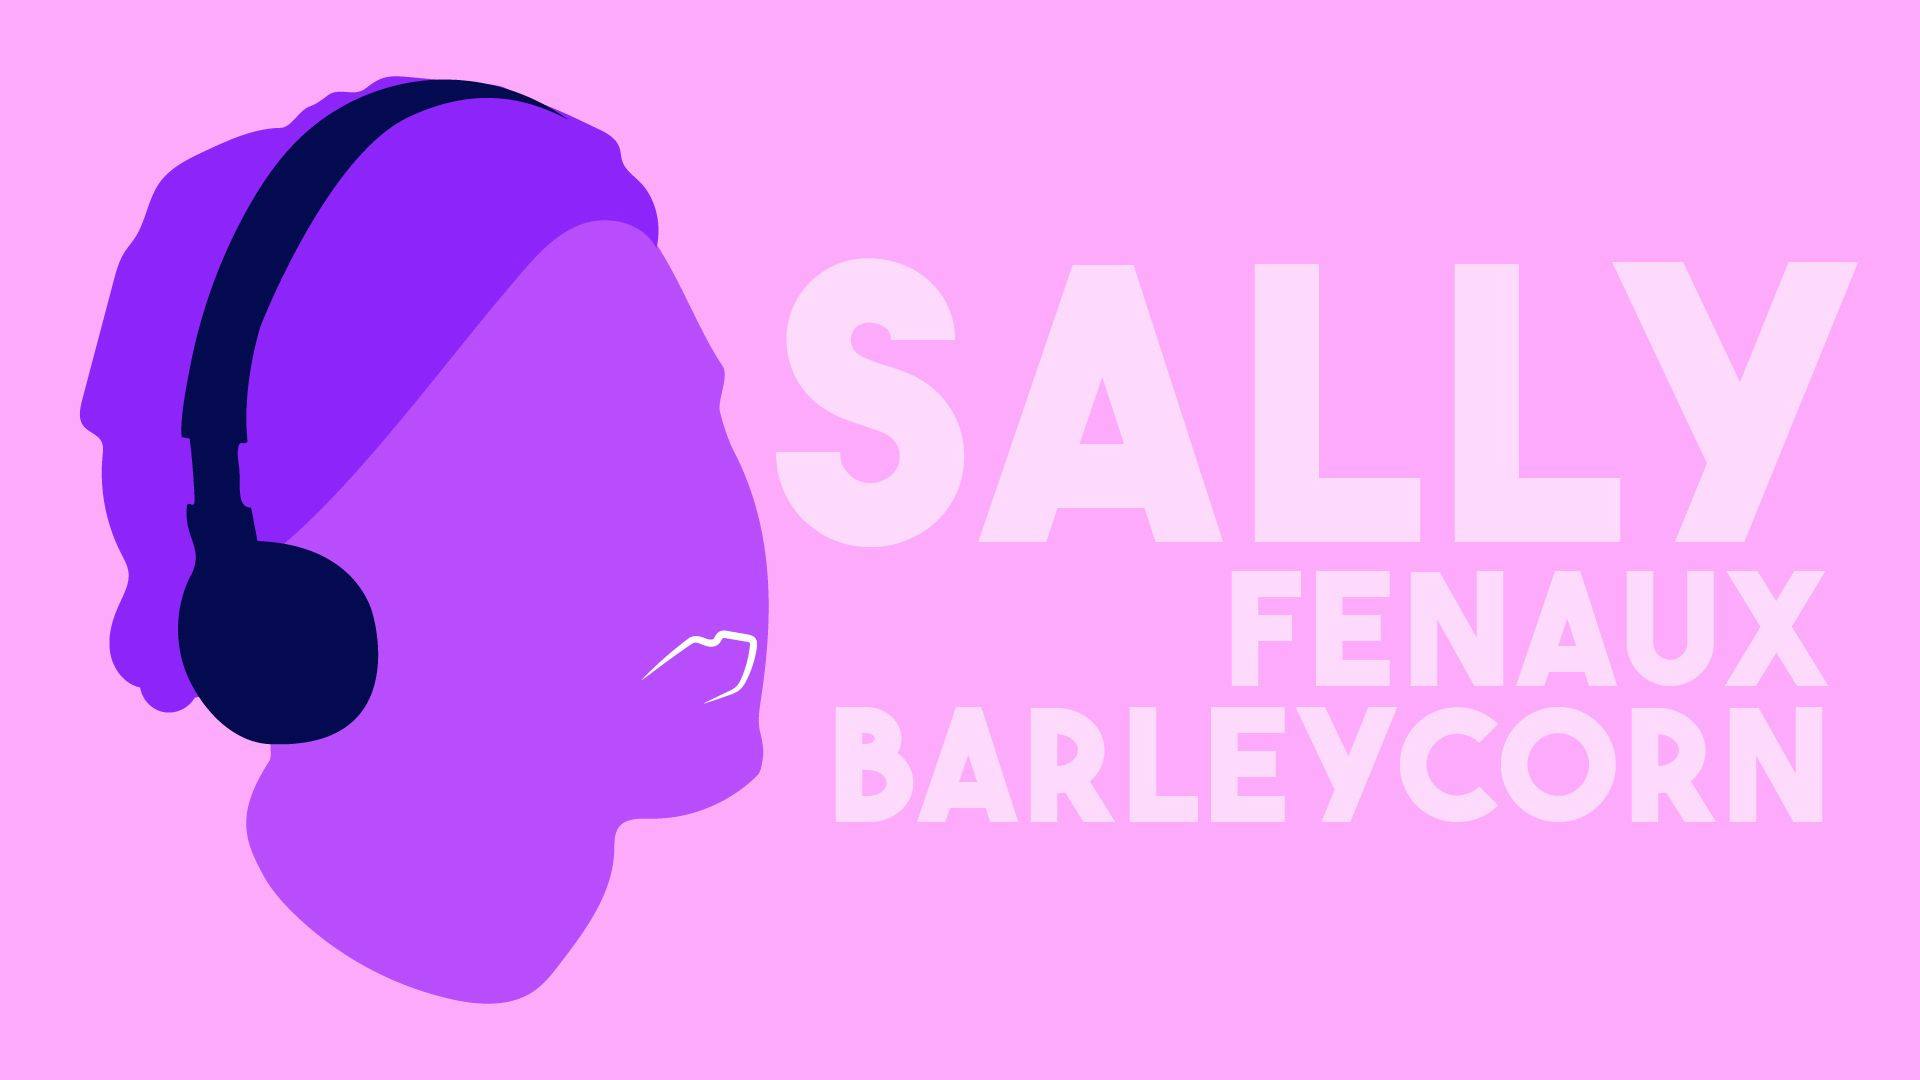 Sally Fenaux Barleycorn - Director Video